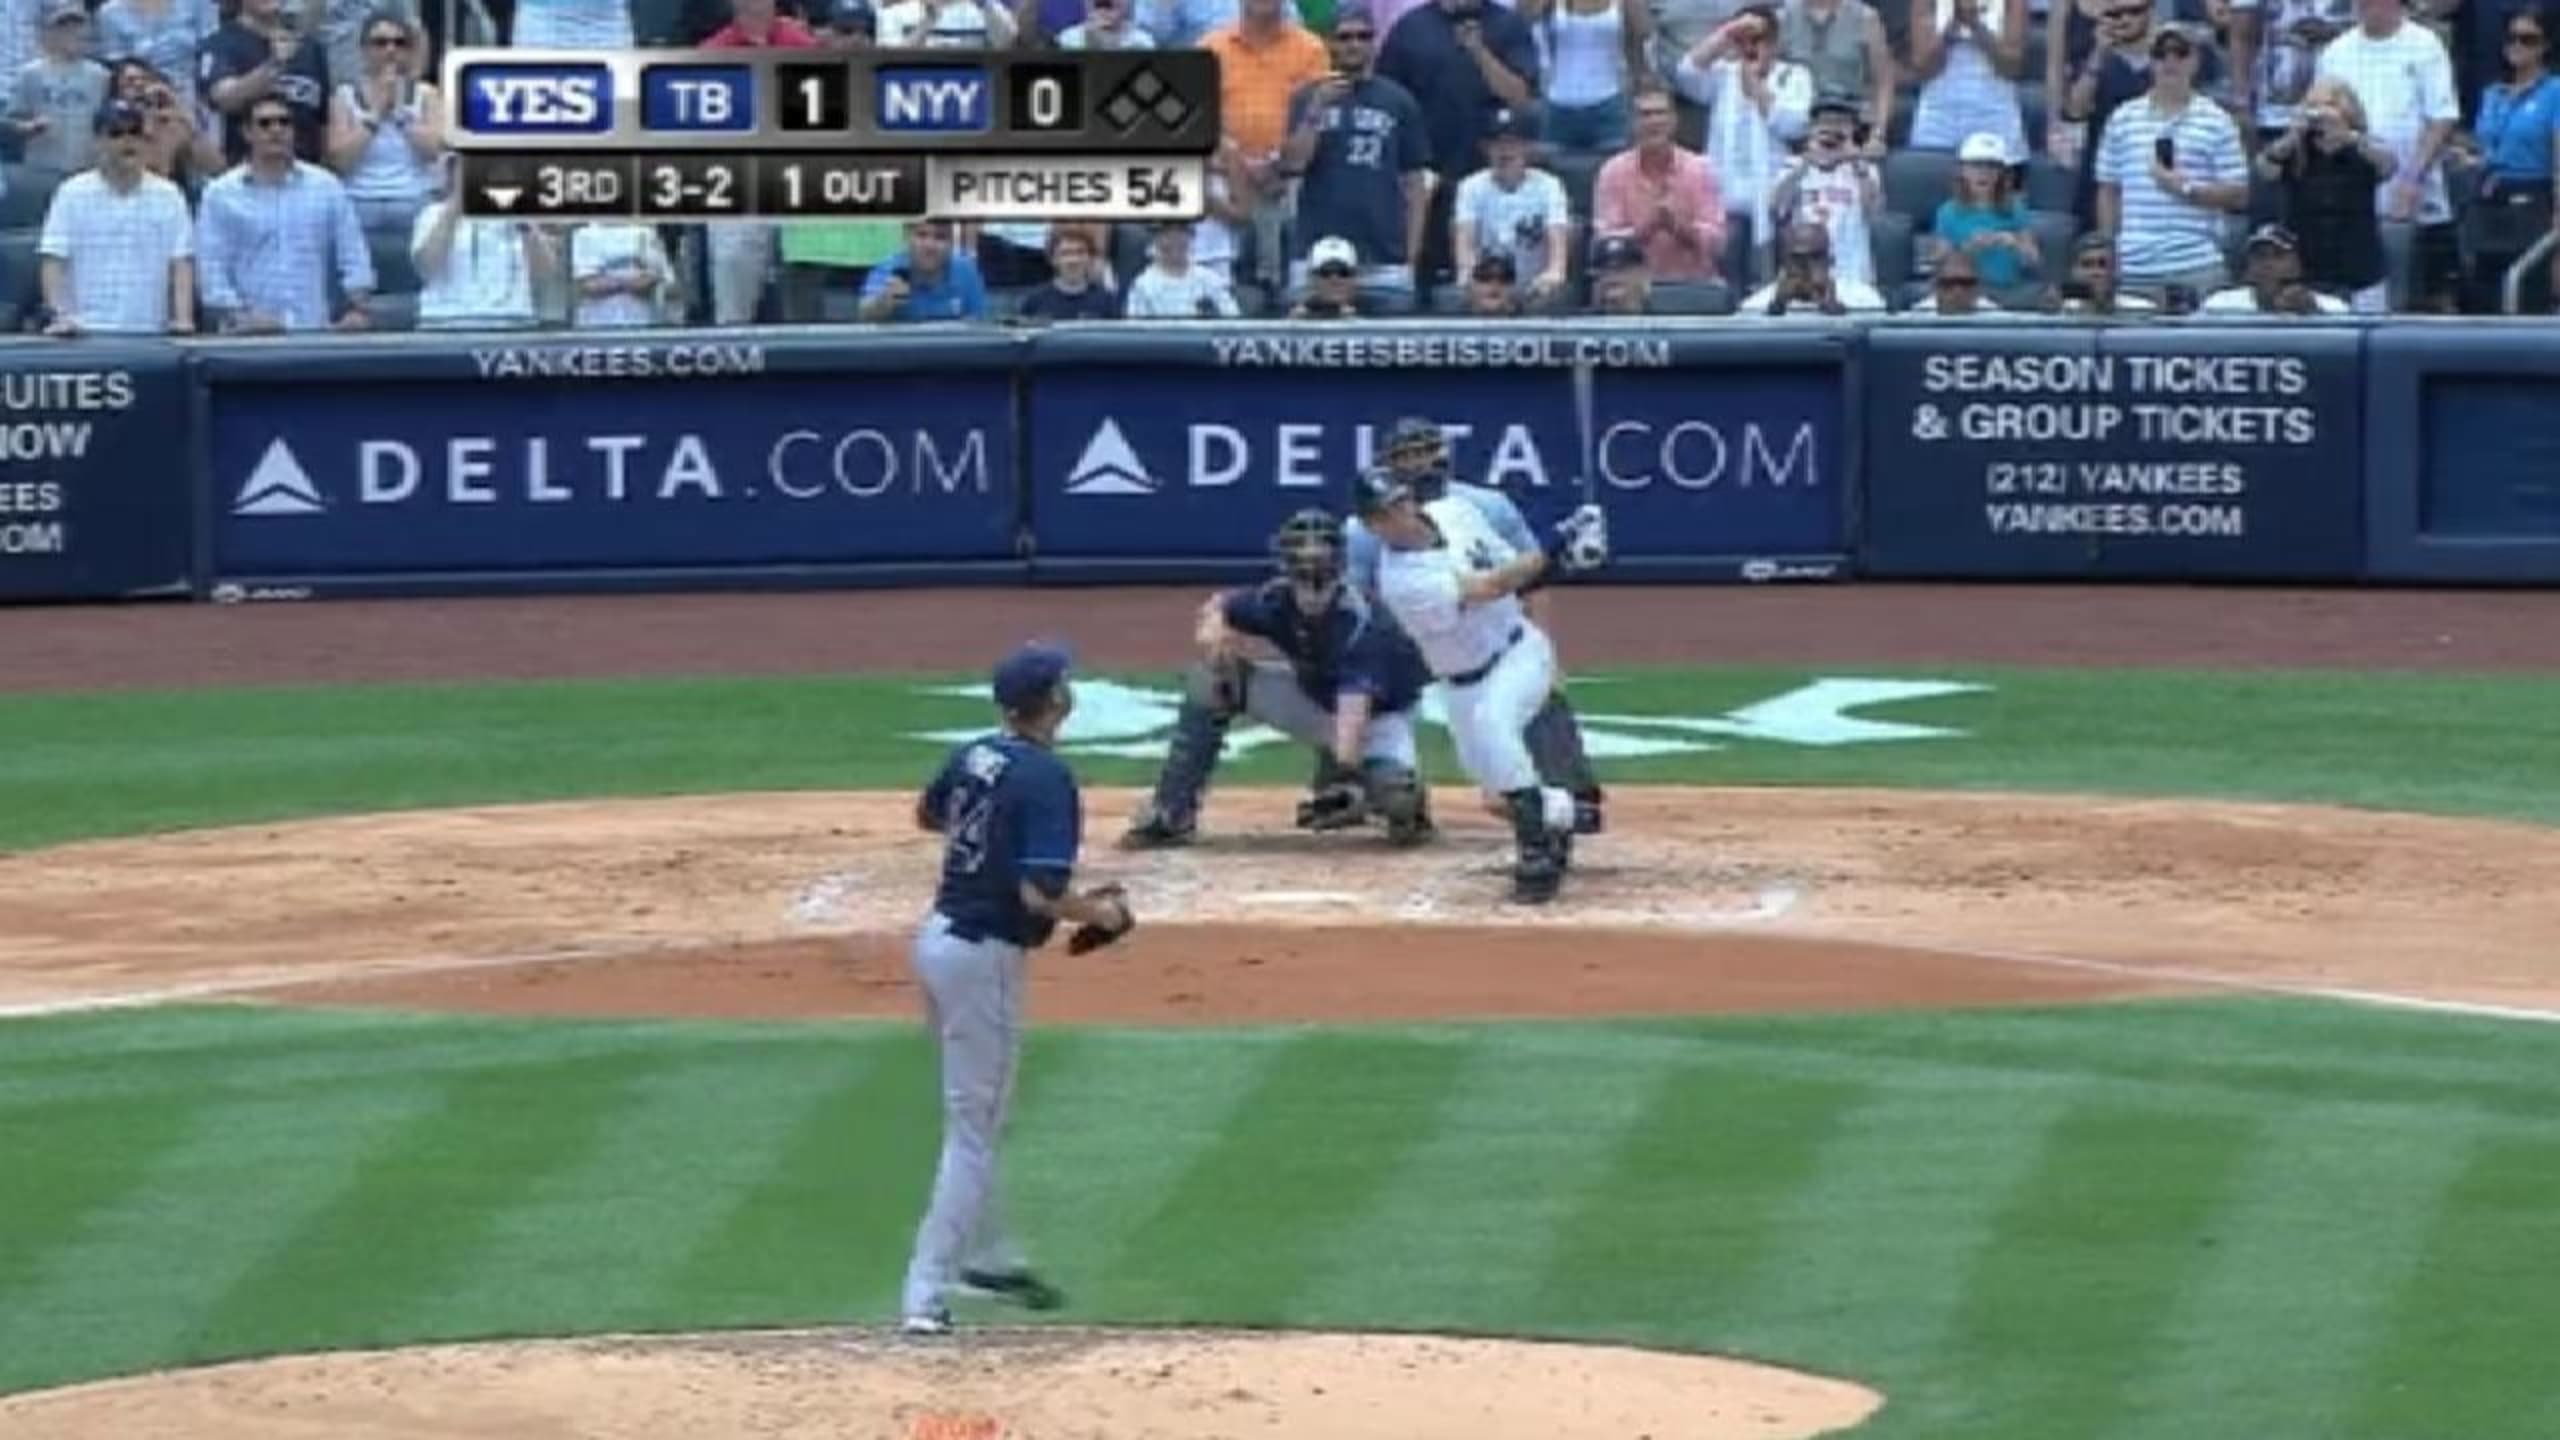 This Day in Yankees History: Derek Jeter's 3,000th hit - Pinstripe Alley